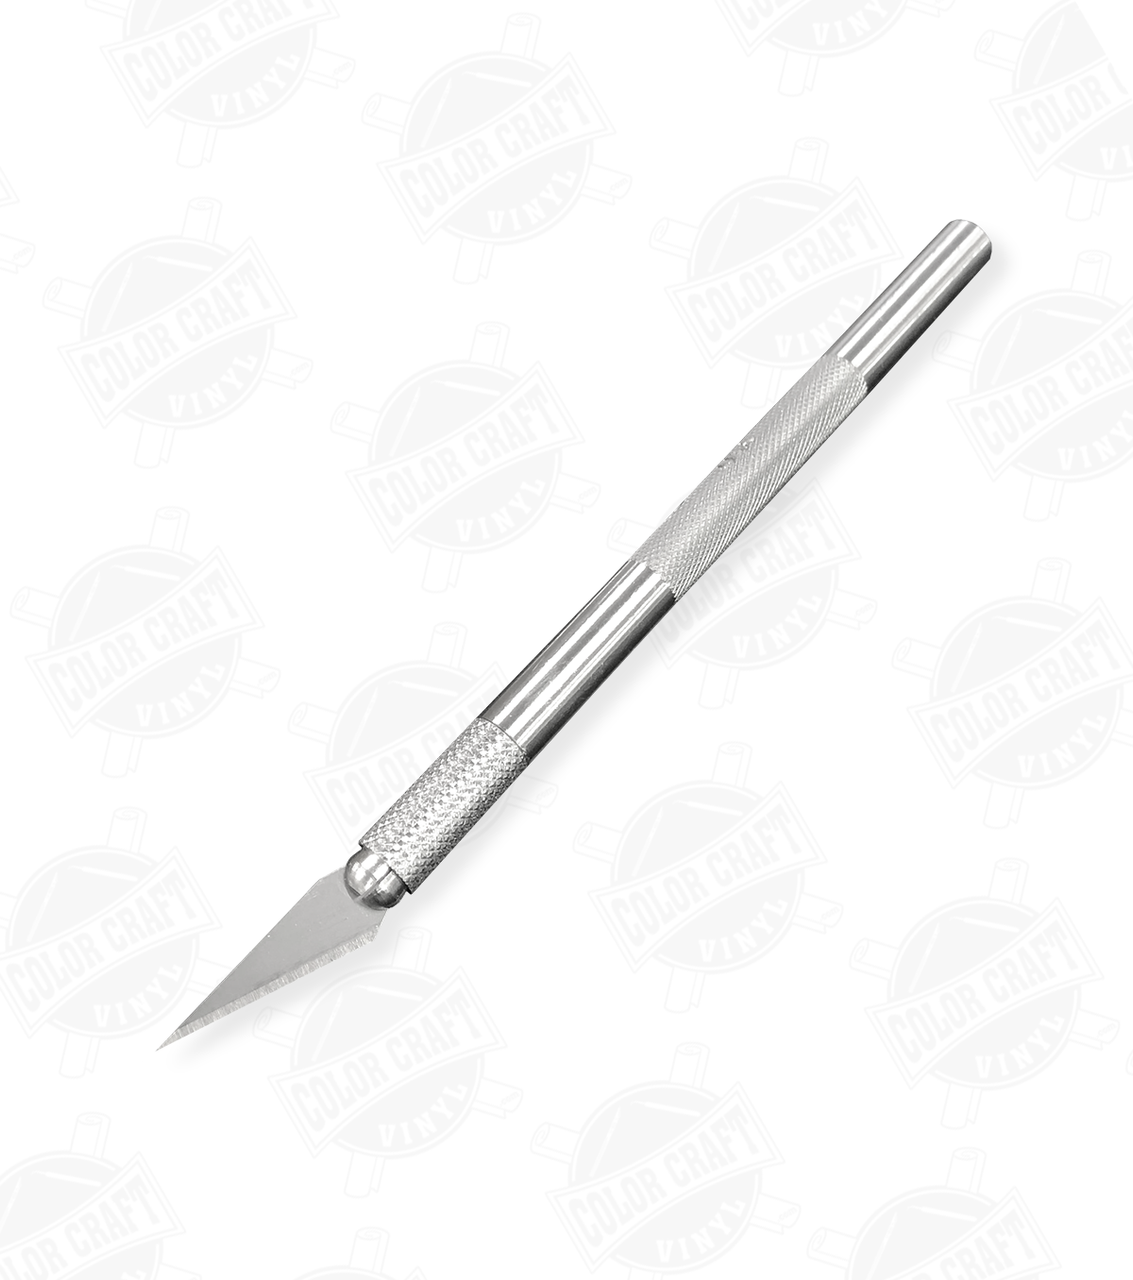 Dremel 4V Cordless Glue Pen Review - Pro Tool Reviews